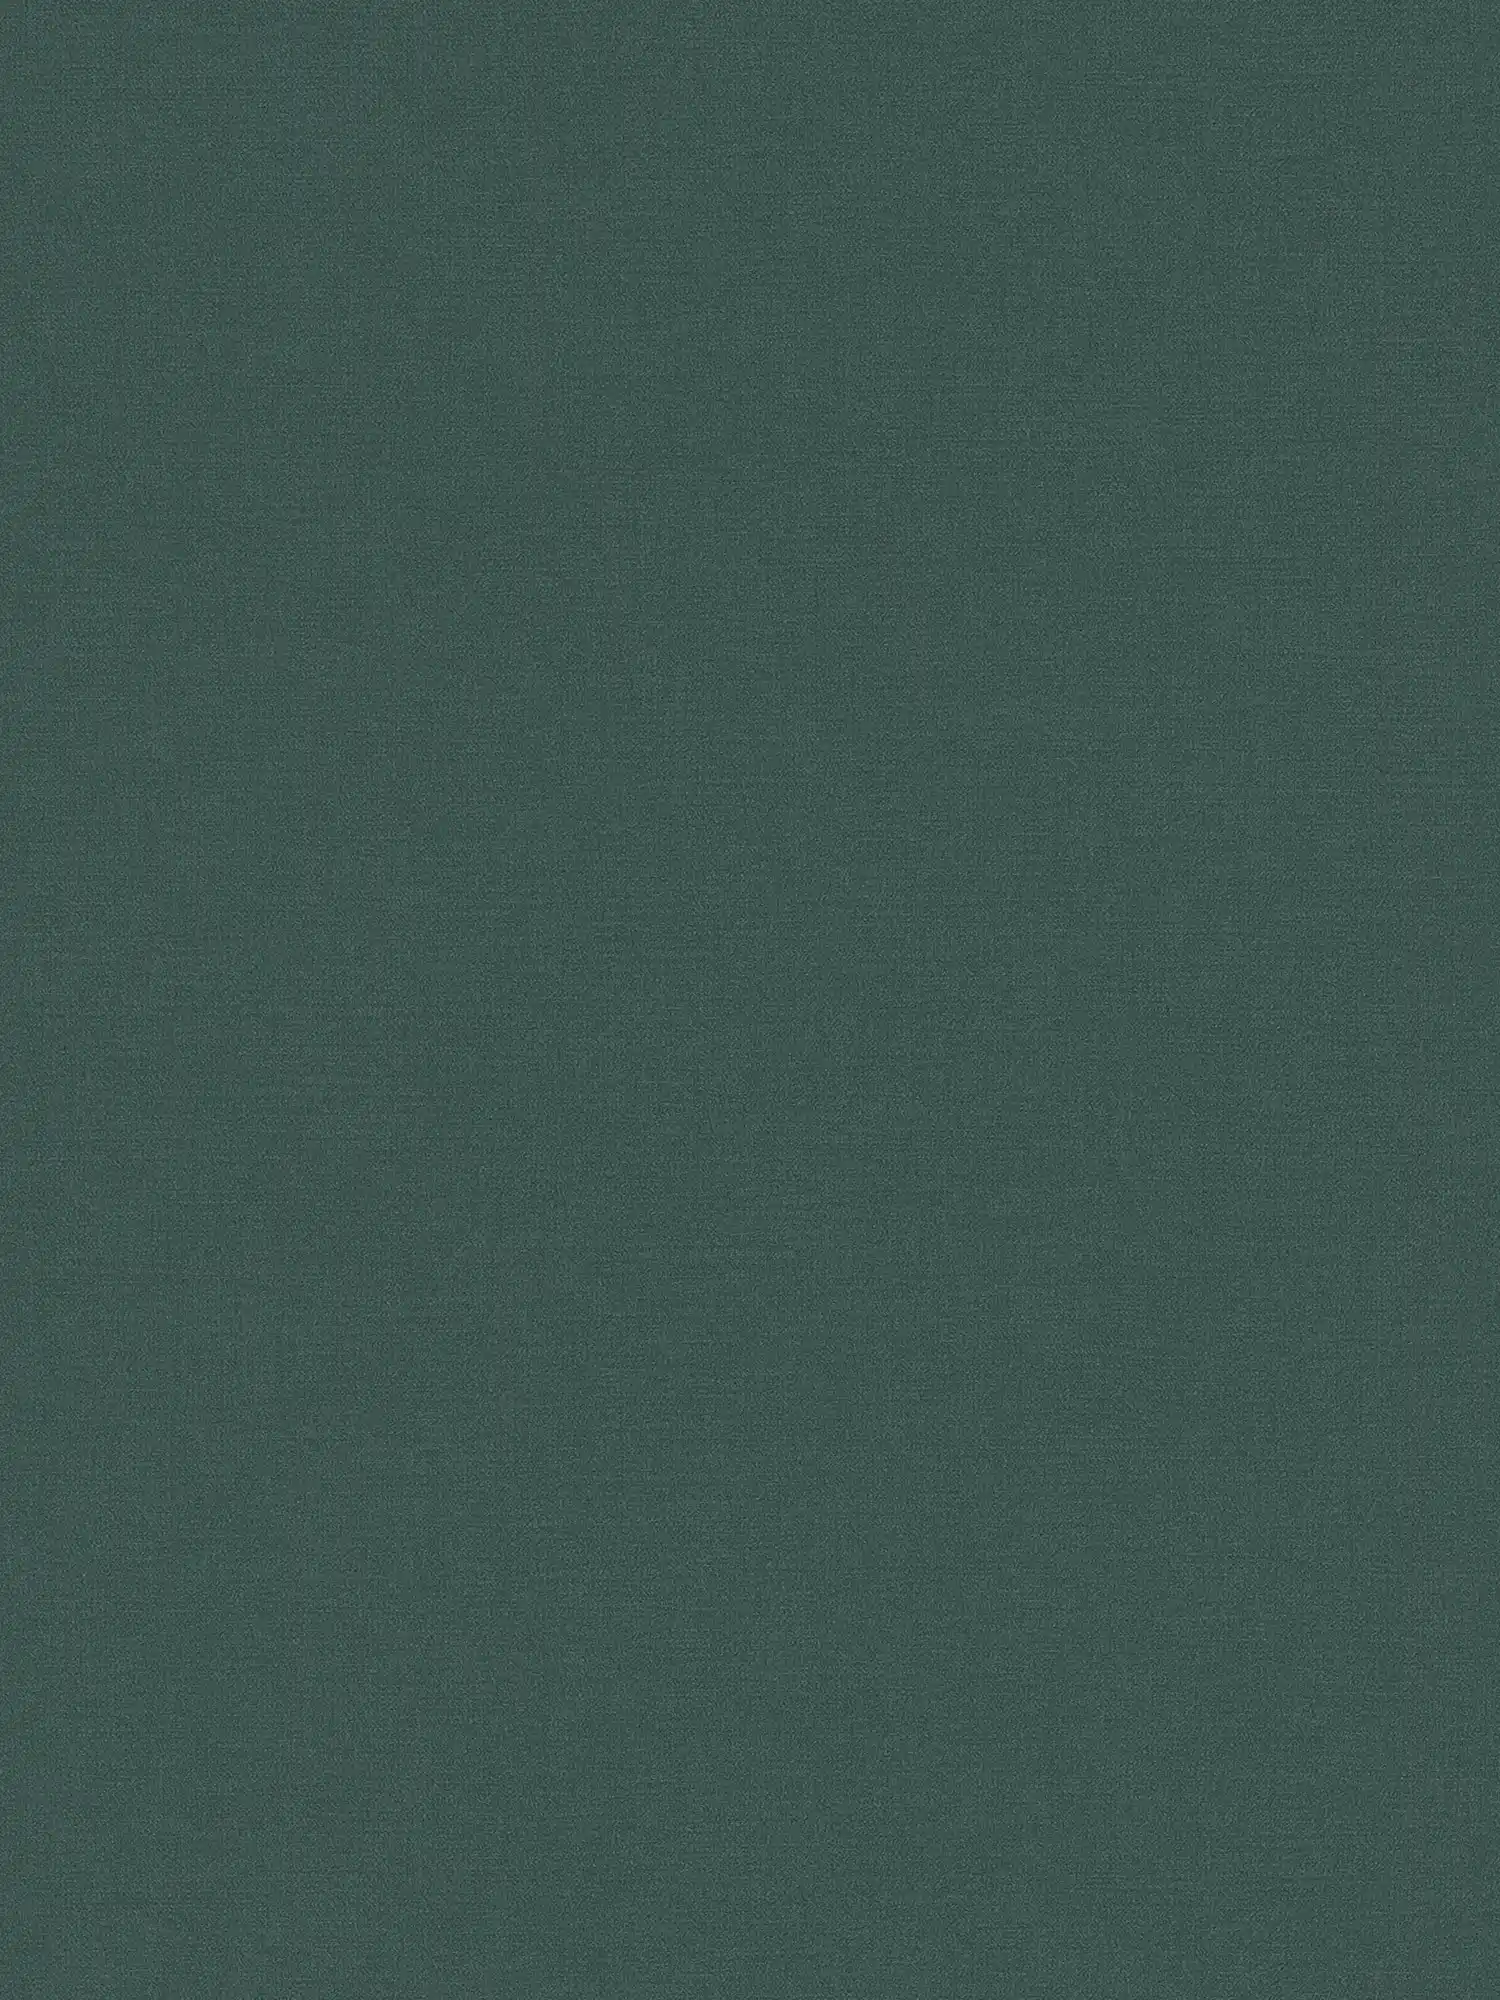 Plain plain wallpaper in dark colour - petrol, green
